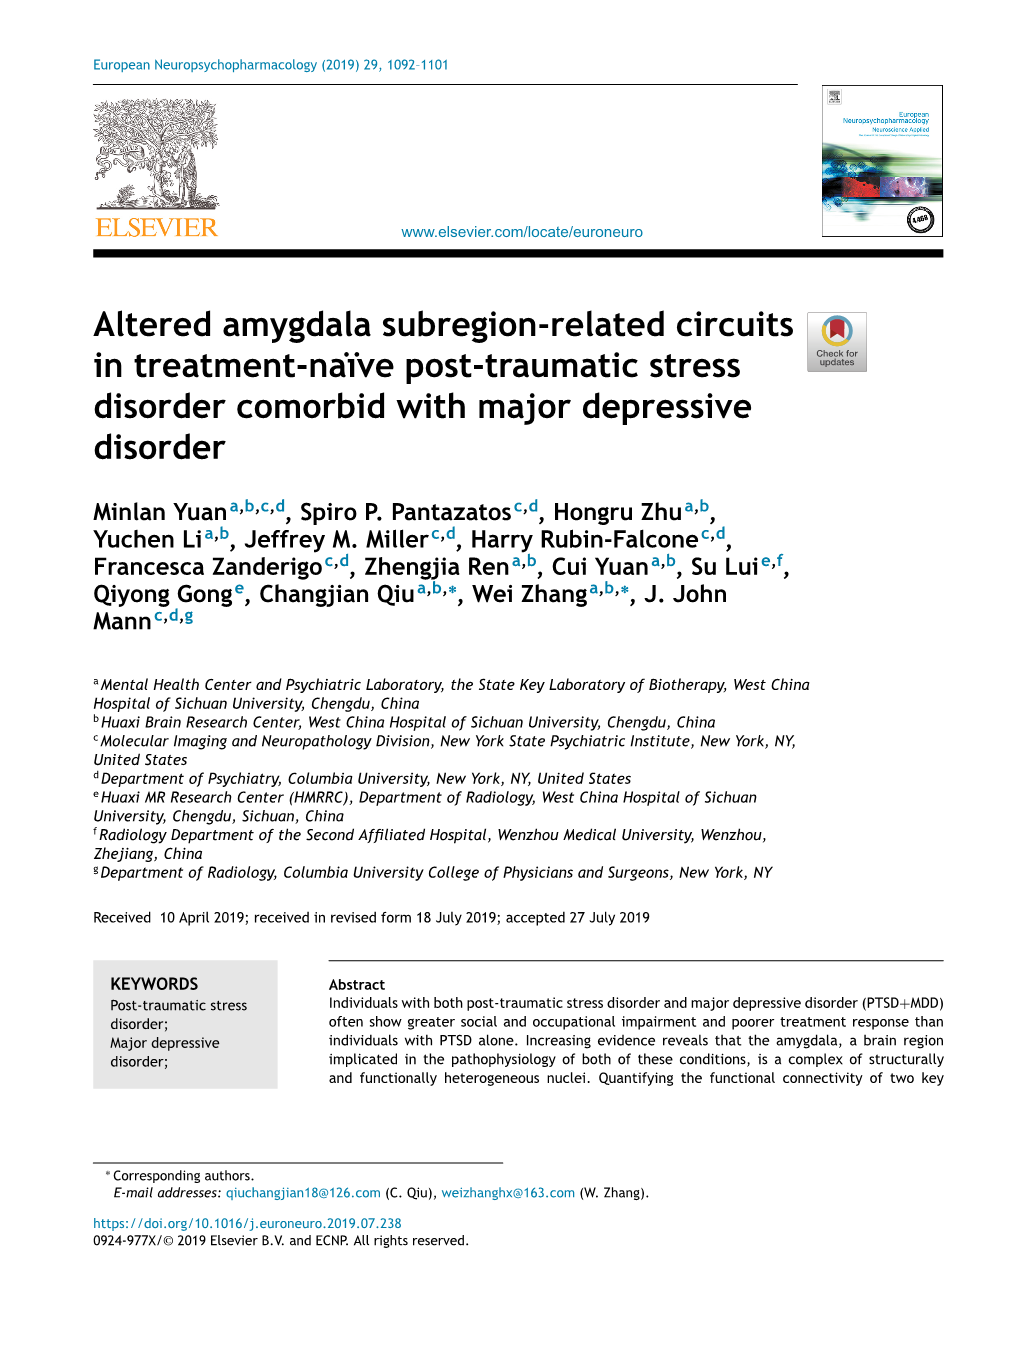 Altered Amygdala Subregion-Related Circuits in Treatment-Naïve Post-Traumatic Stress Disorder Comorbid with Major Depressive Disorder